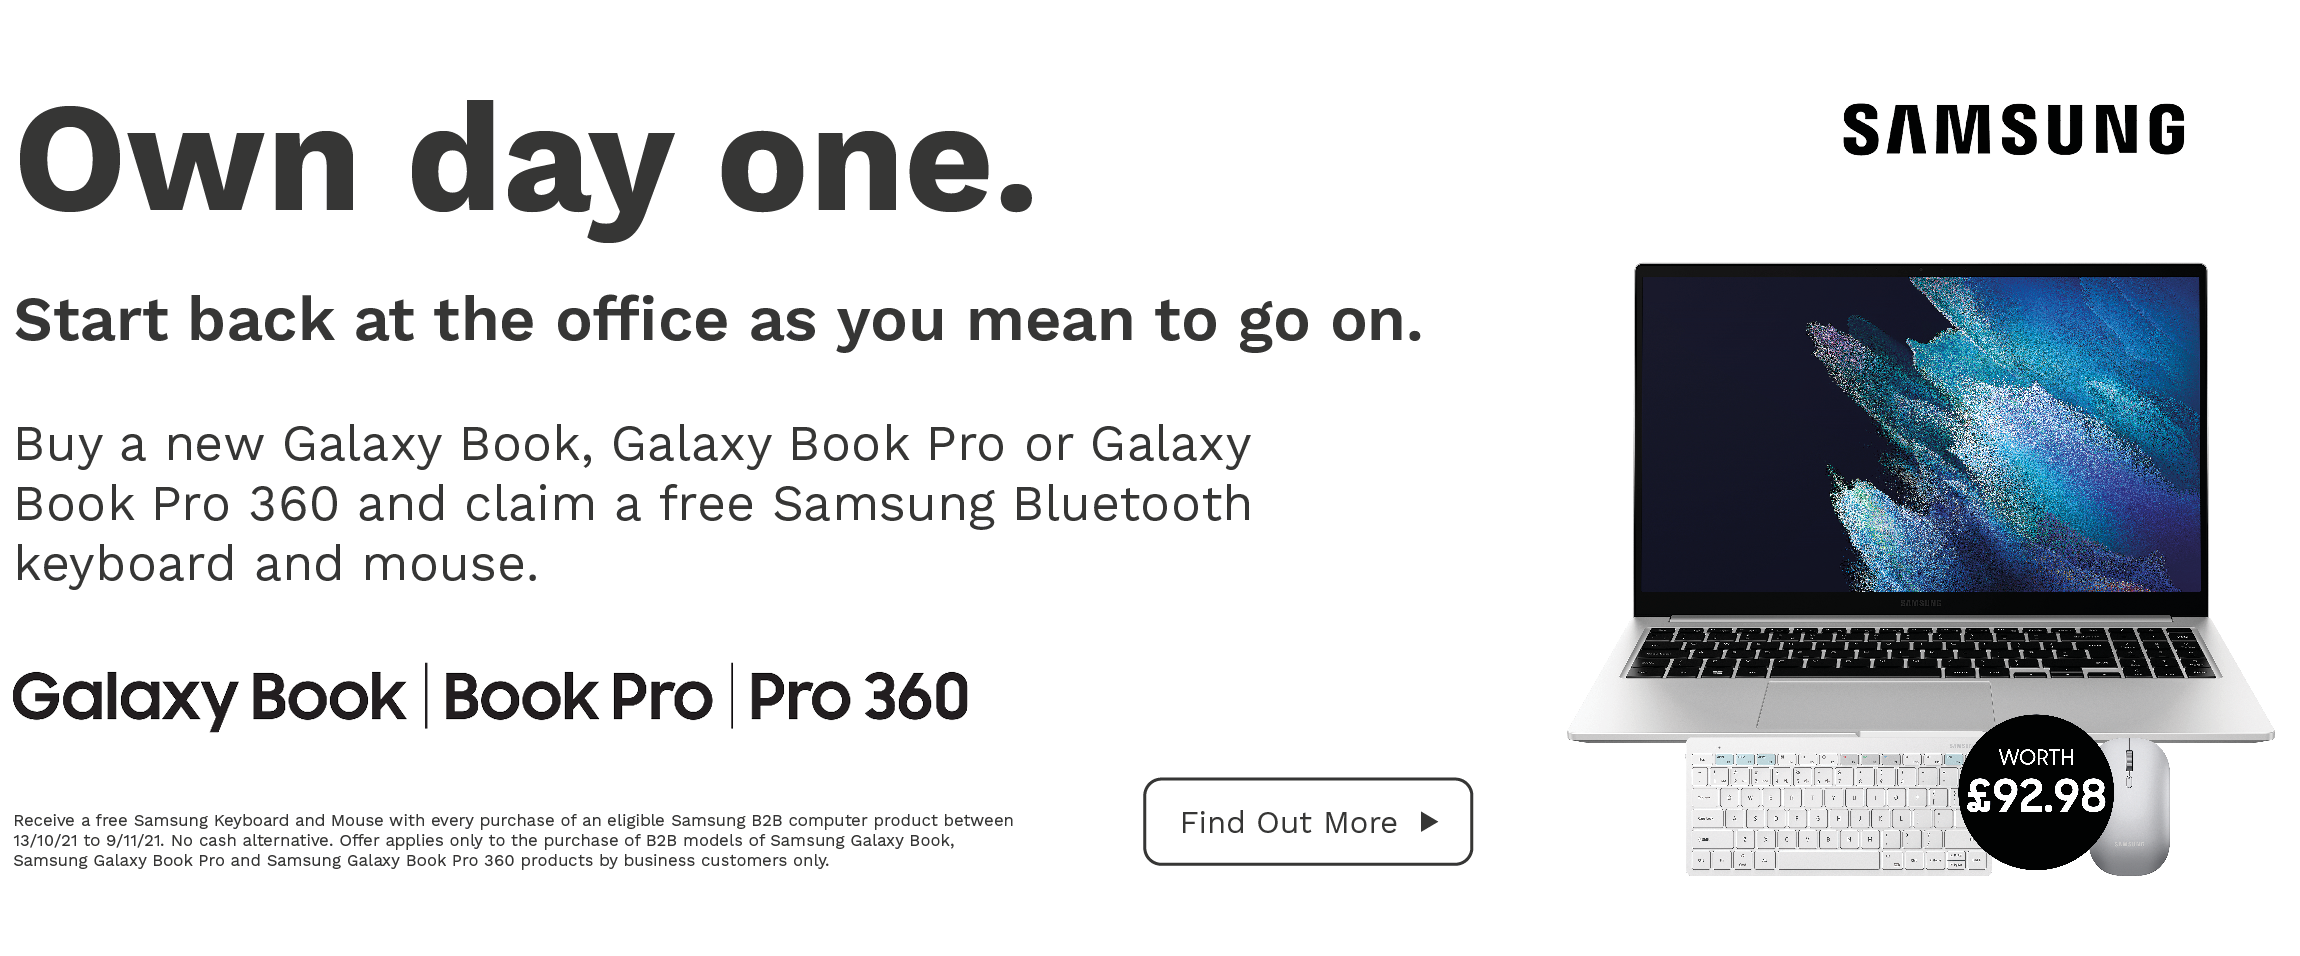 Samsung Galaxy Book Promotion Banner